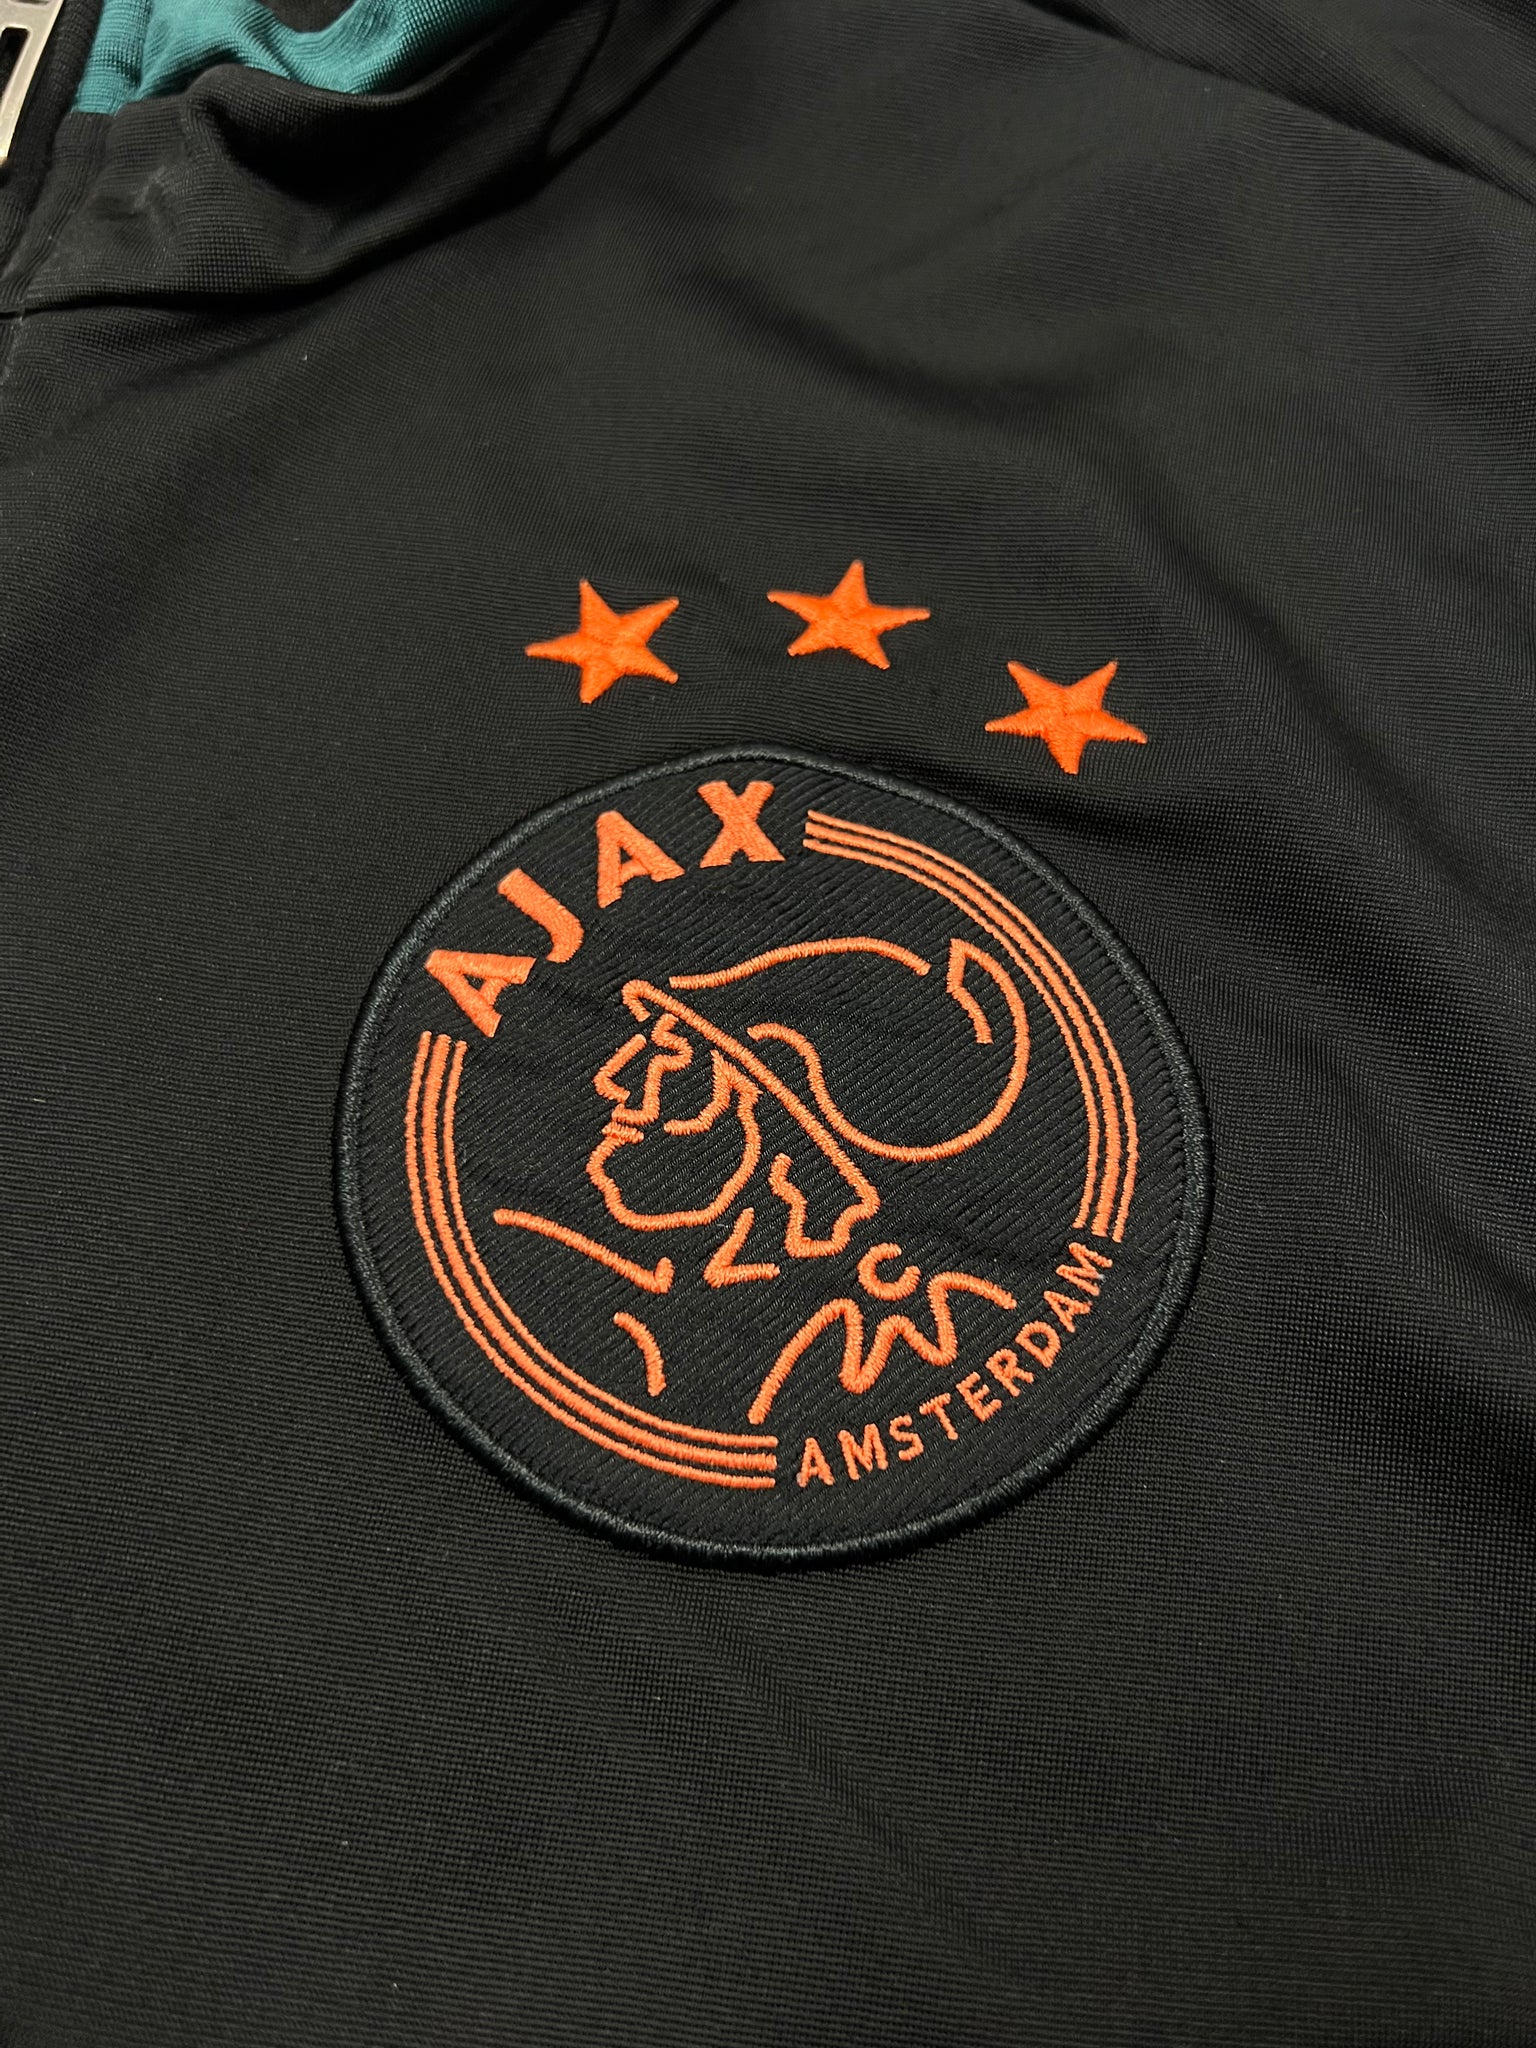 Adidas Ajax Amsterdam Track Jacket (L)